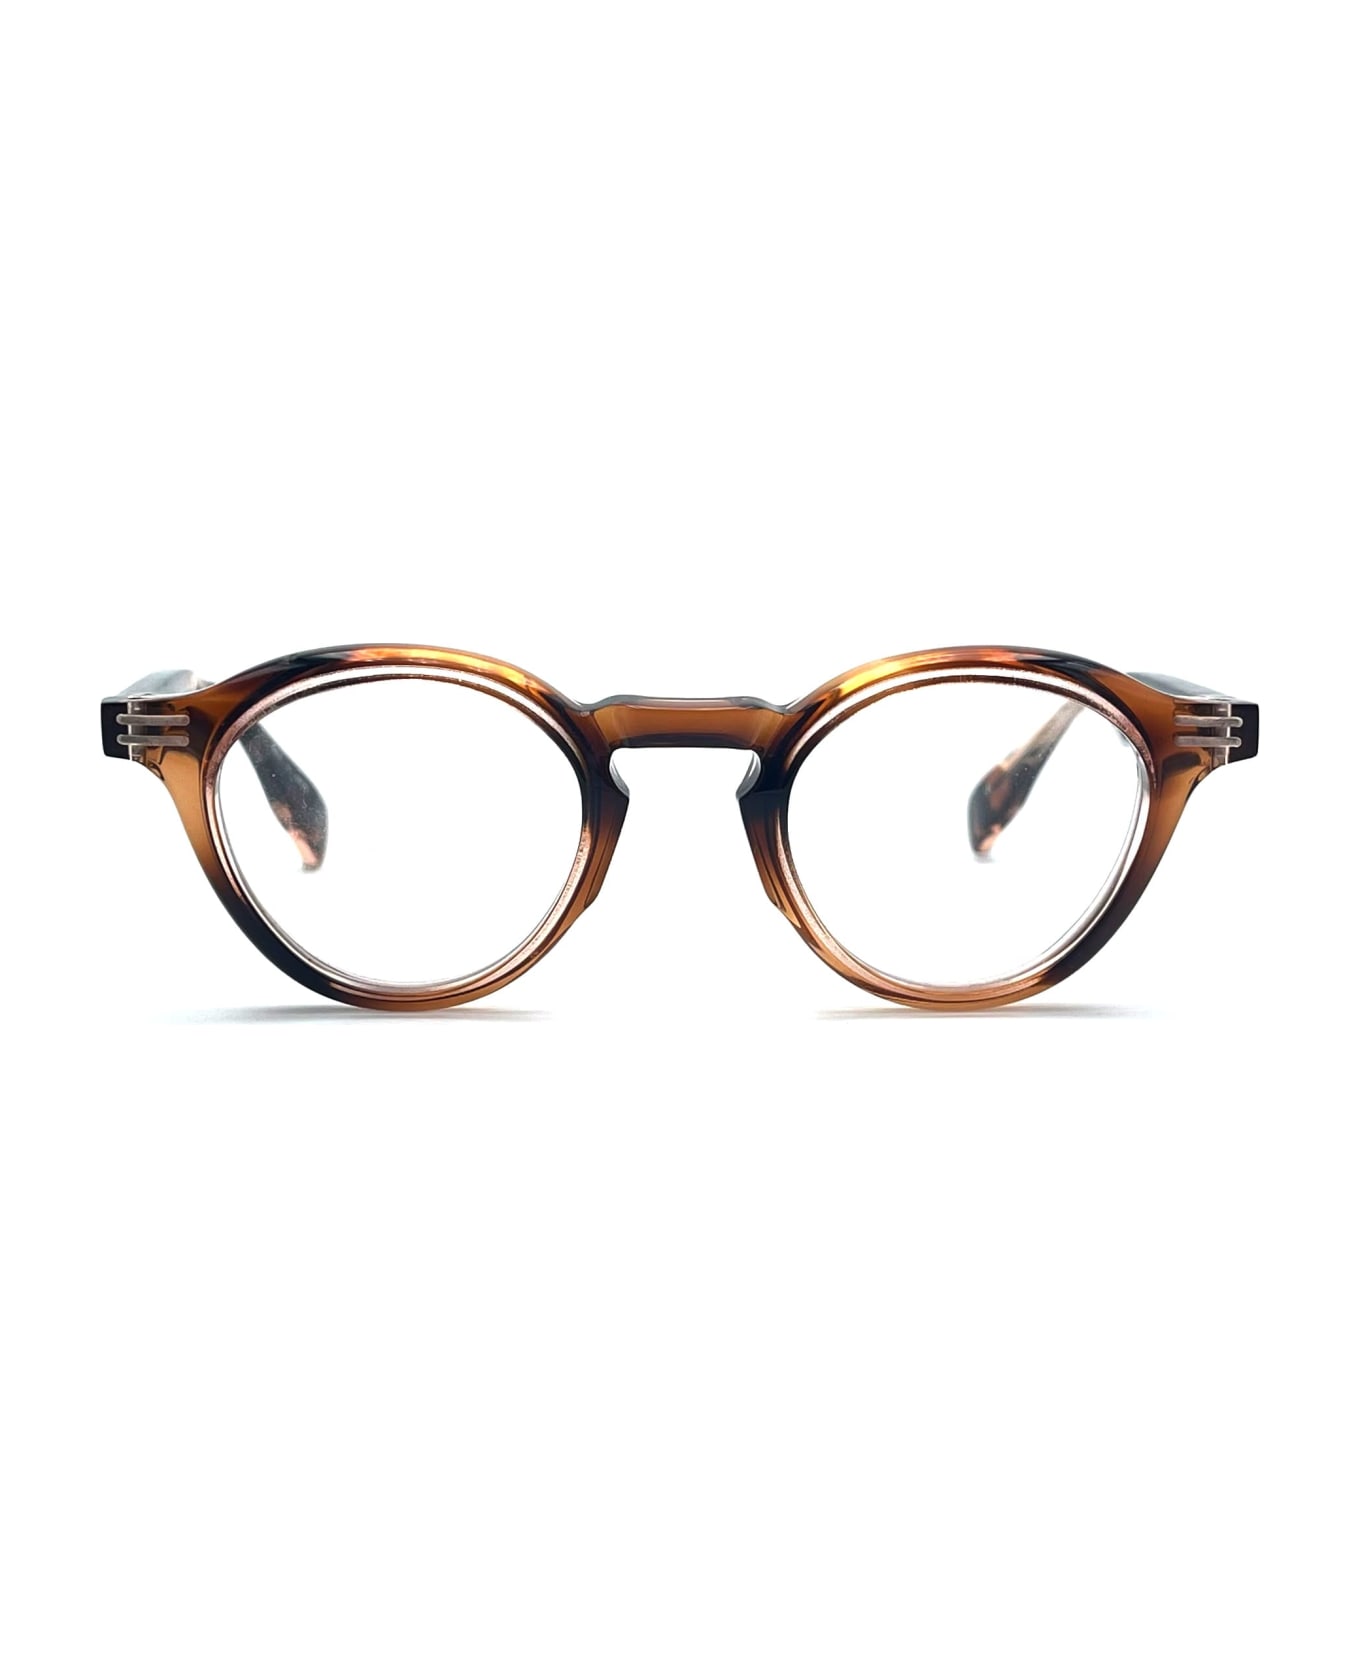 FACTORY900 Rf-019 - 319 Glasses - brown アイウェア